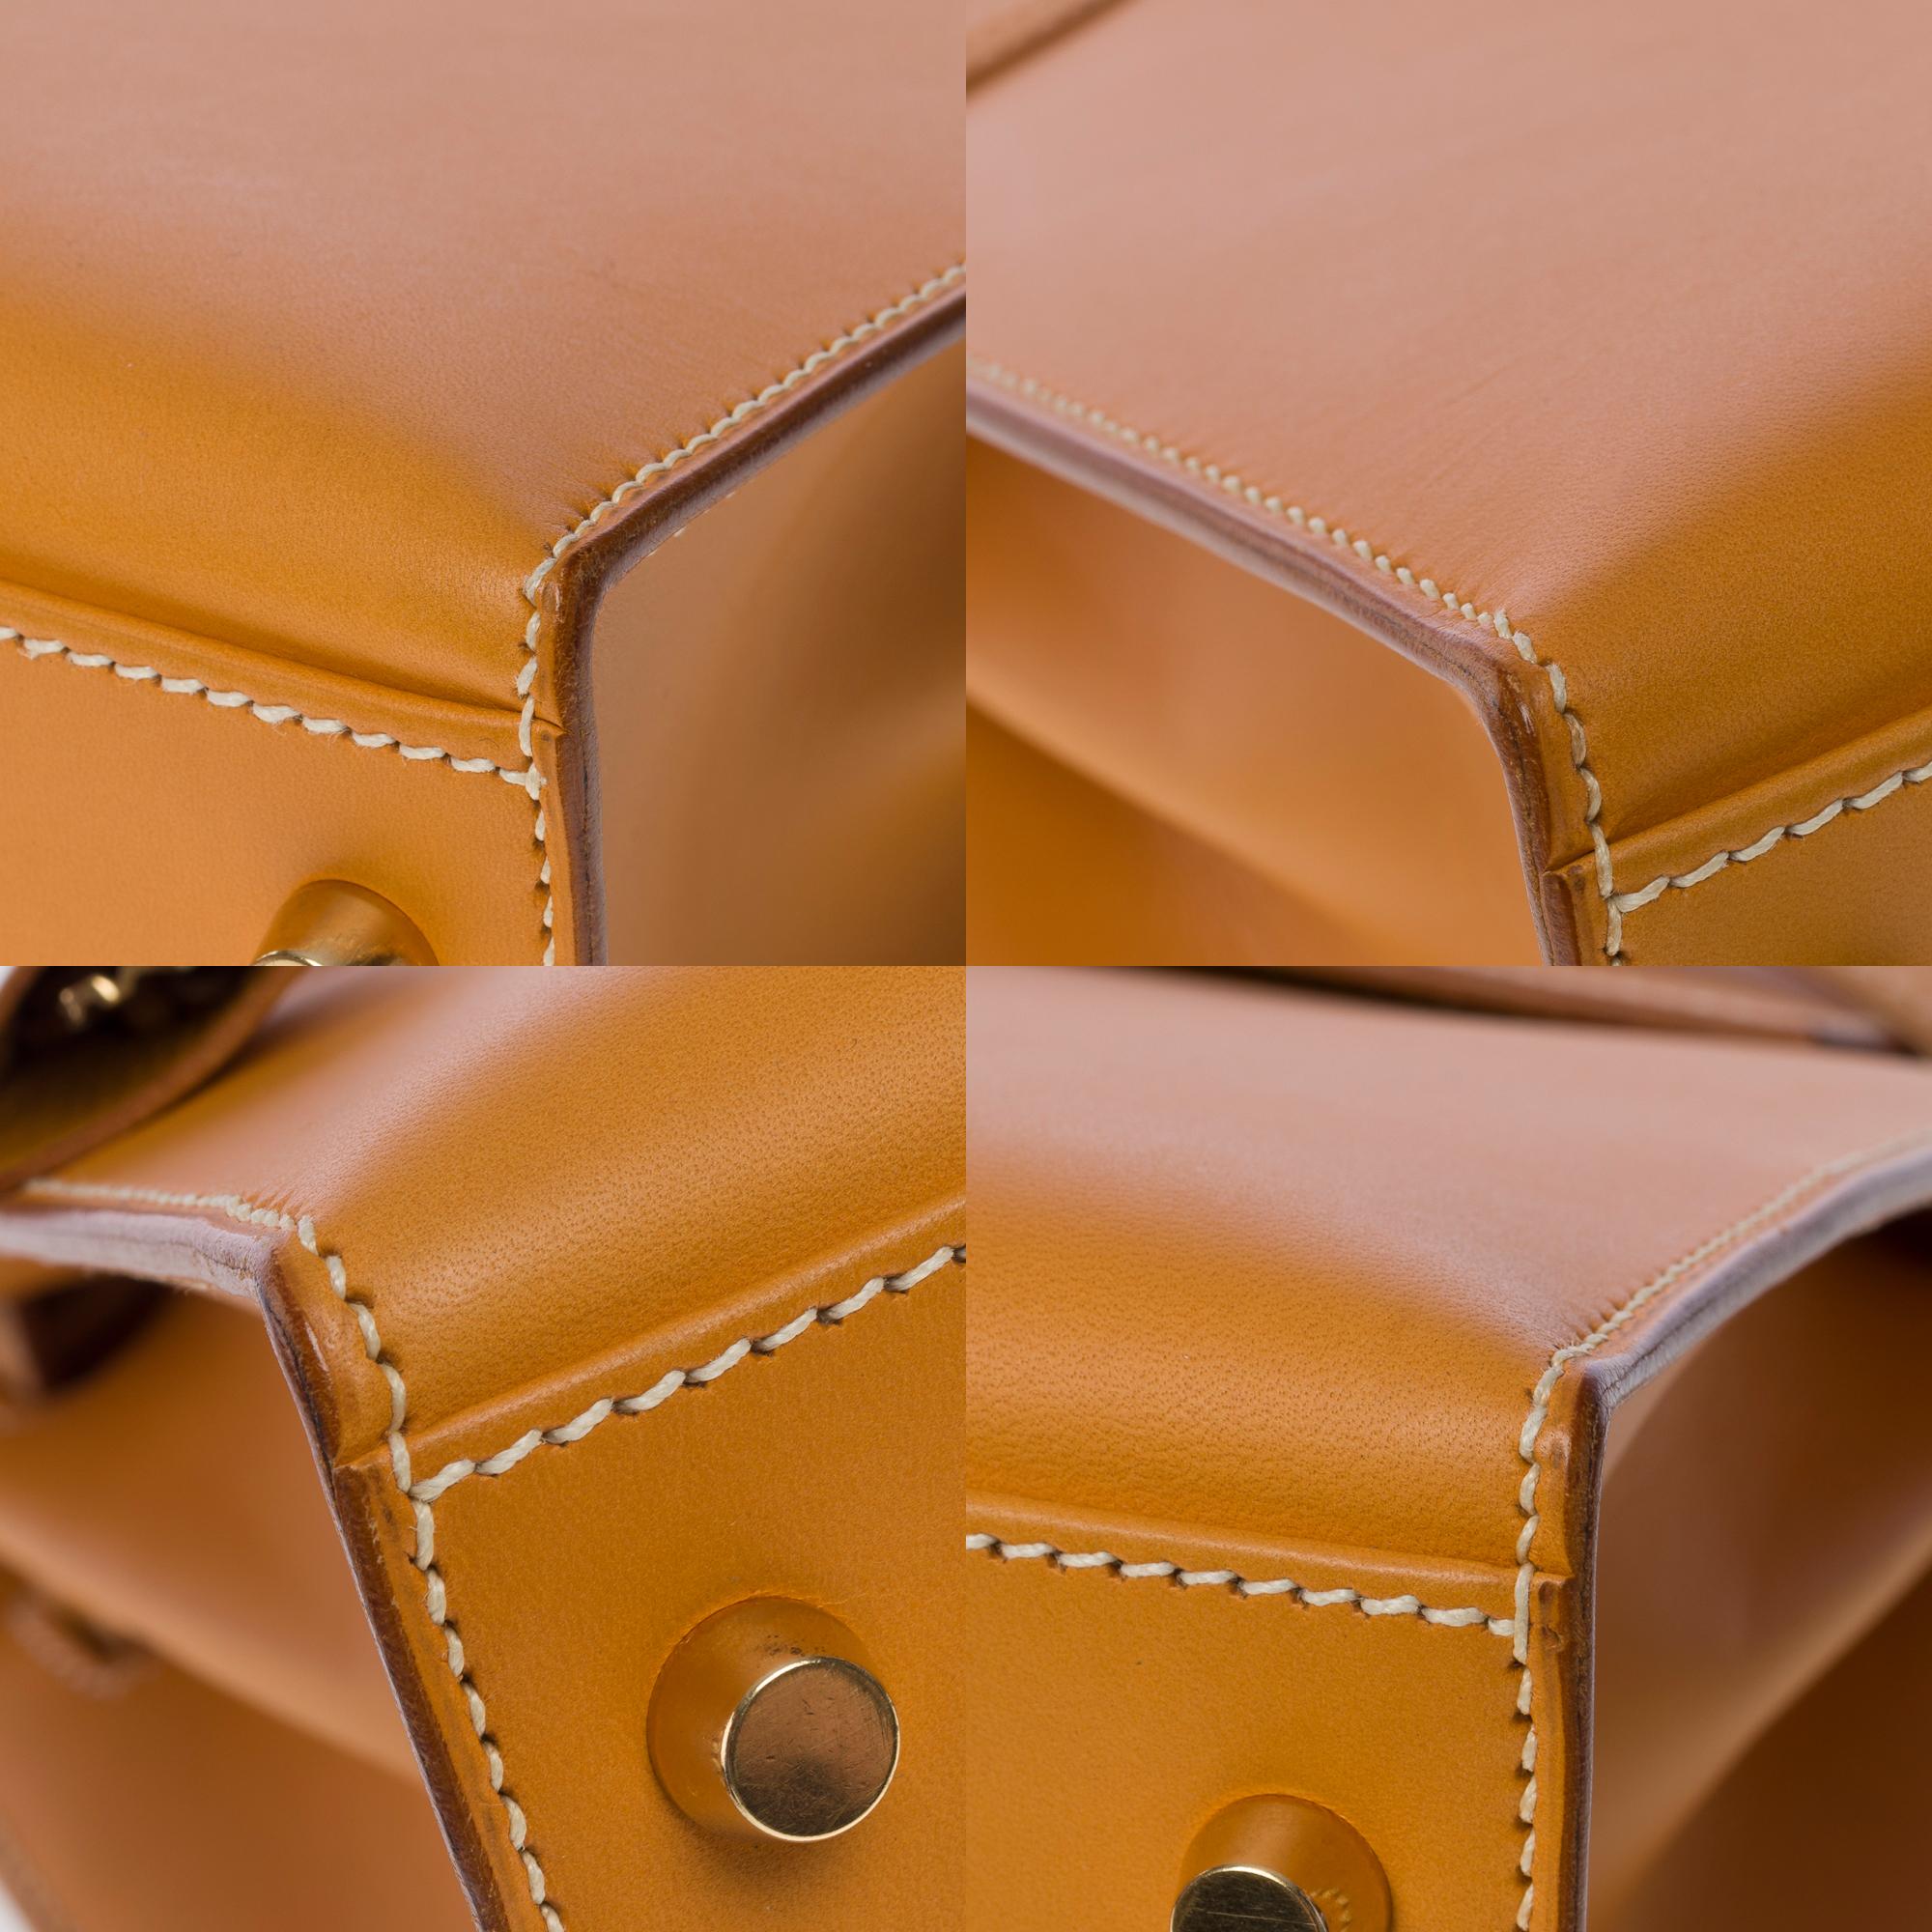 Very Rare Hermès Kelly 32 sellier handbag strap in Gold Chamonix leather , GHW 7